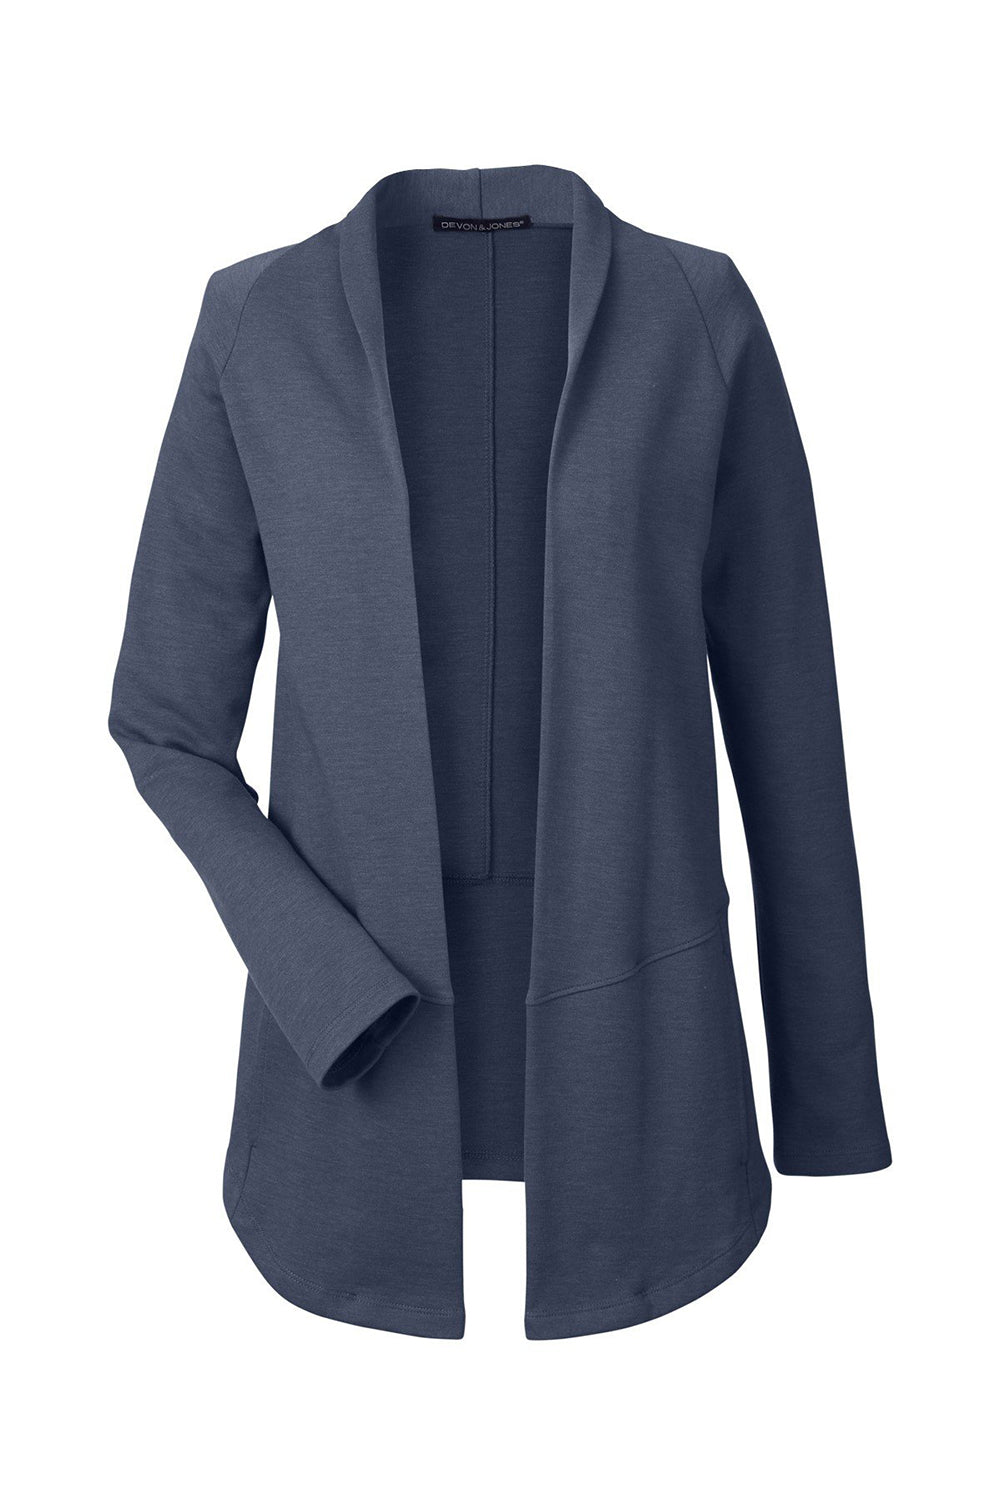 Devon & Jones DG481W Womens New Classics Charleston Cardigan Sweater Navy Blue Melange Flat Front